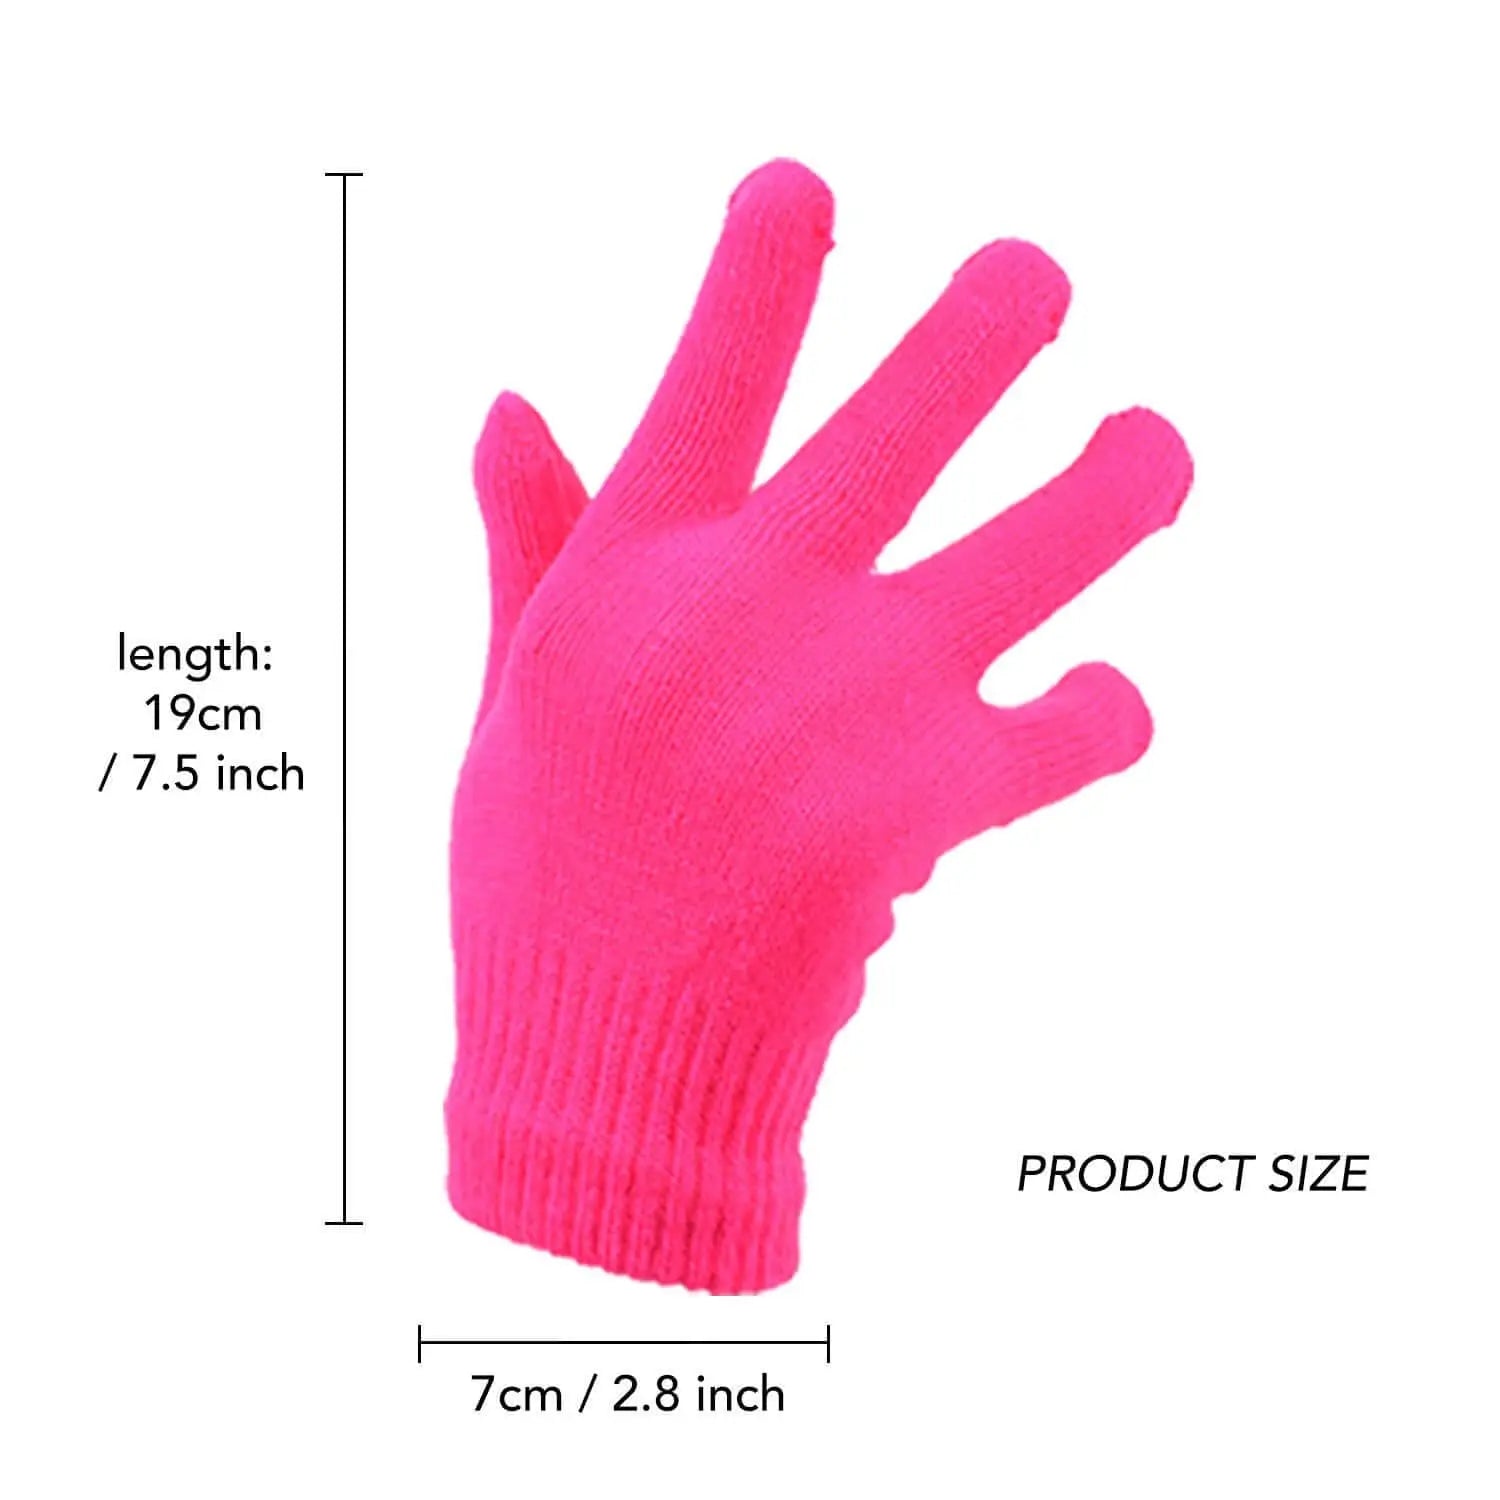 Neon 2-in-1 Fingerless Magic Glove Pack - Pink - White Background